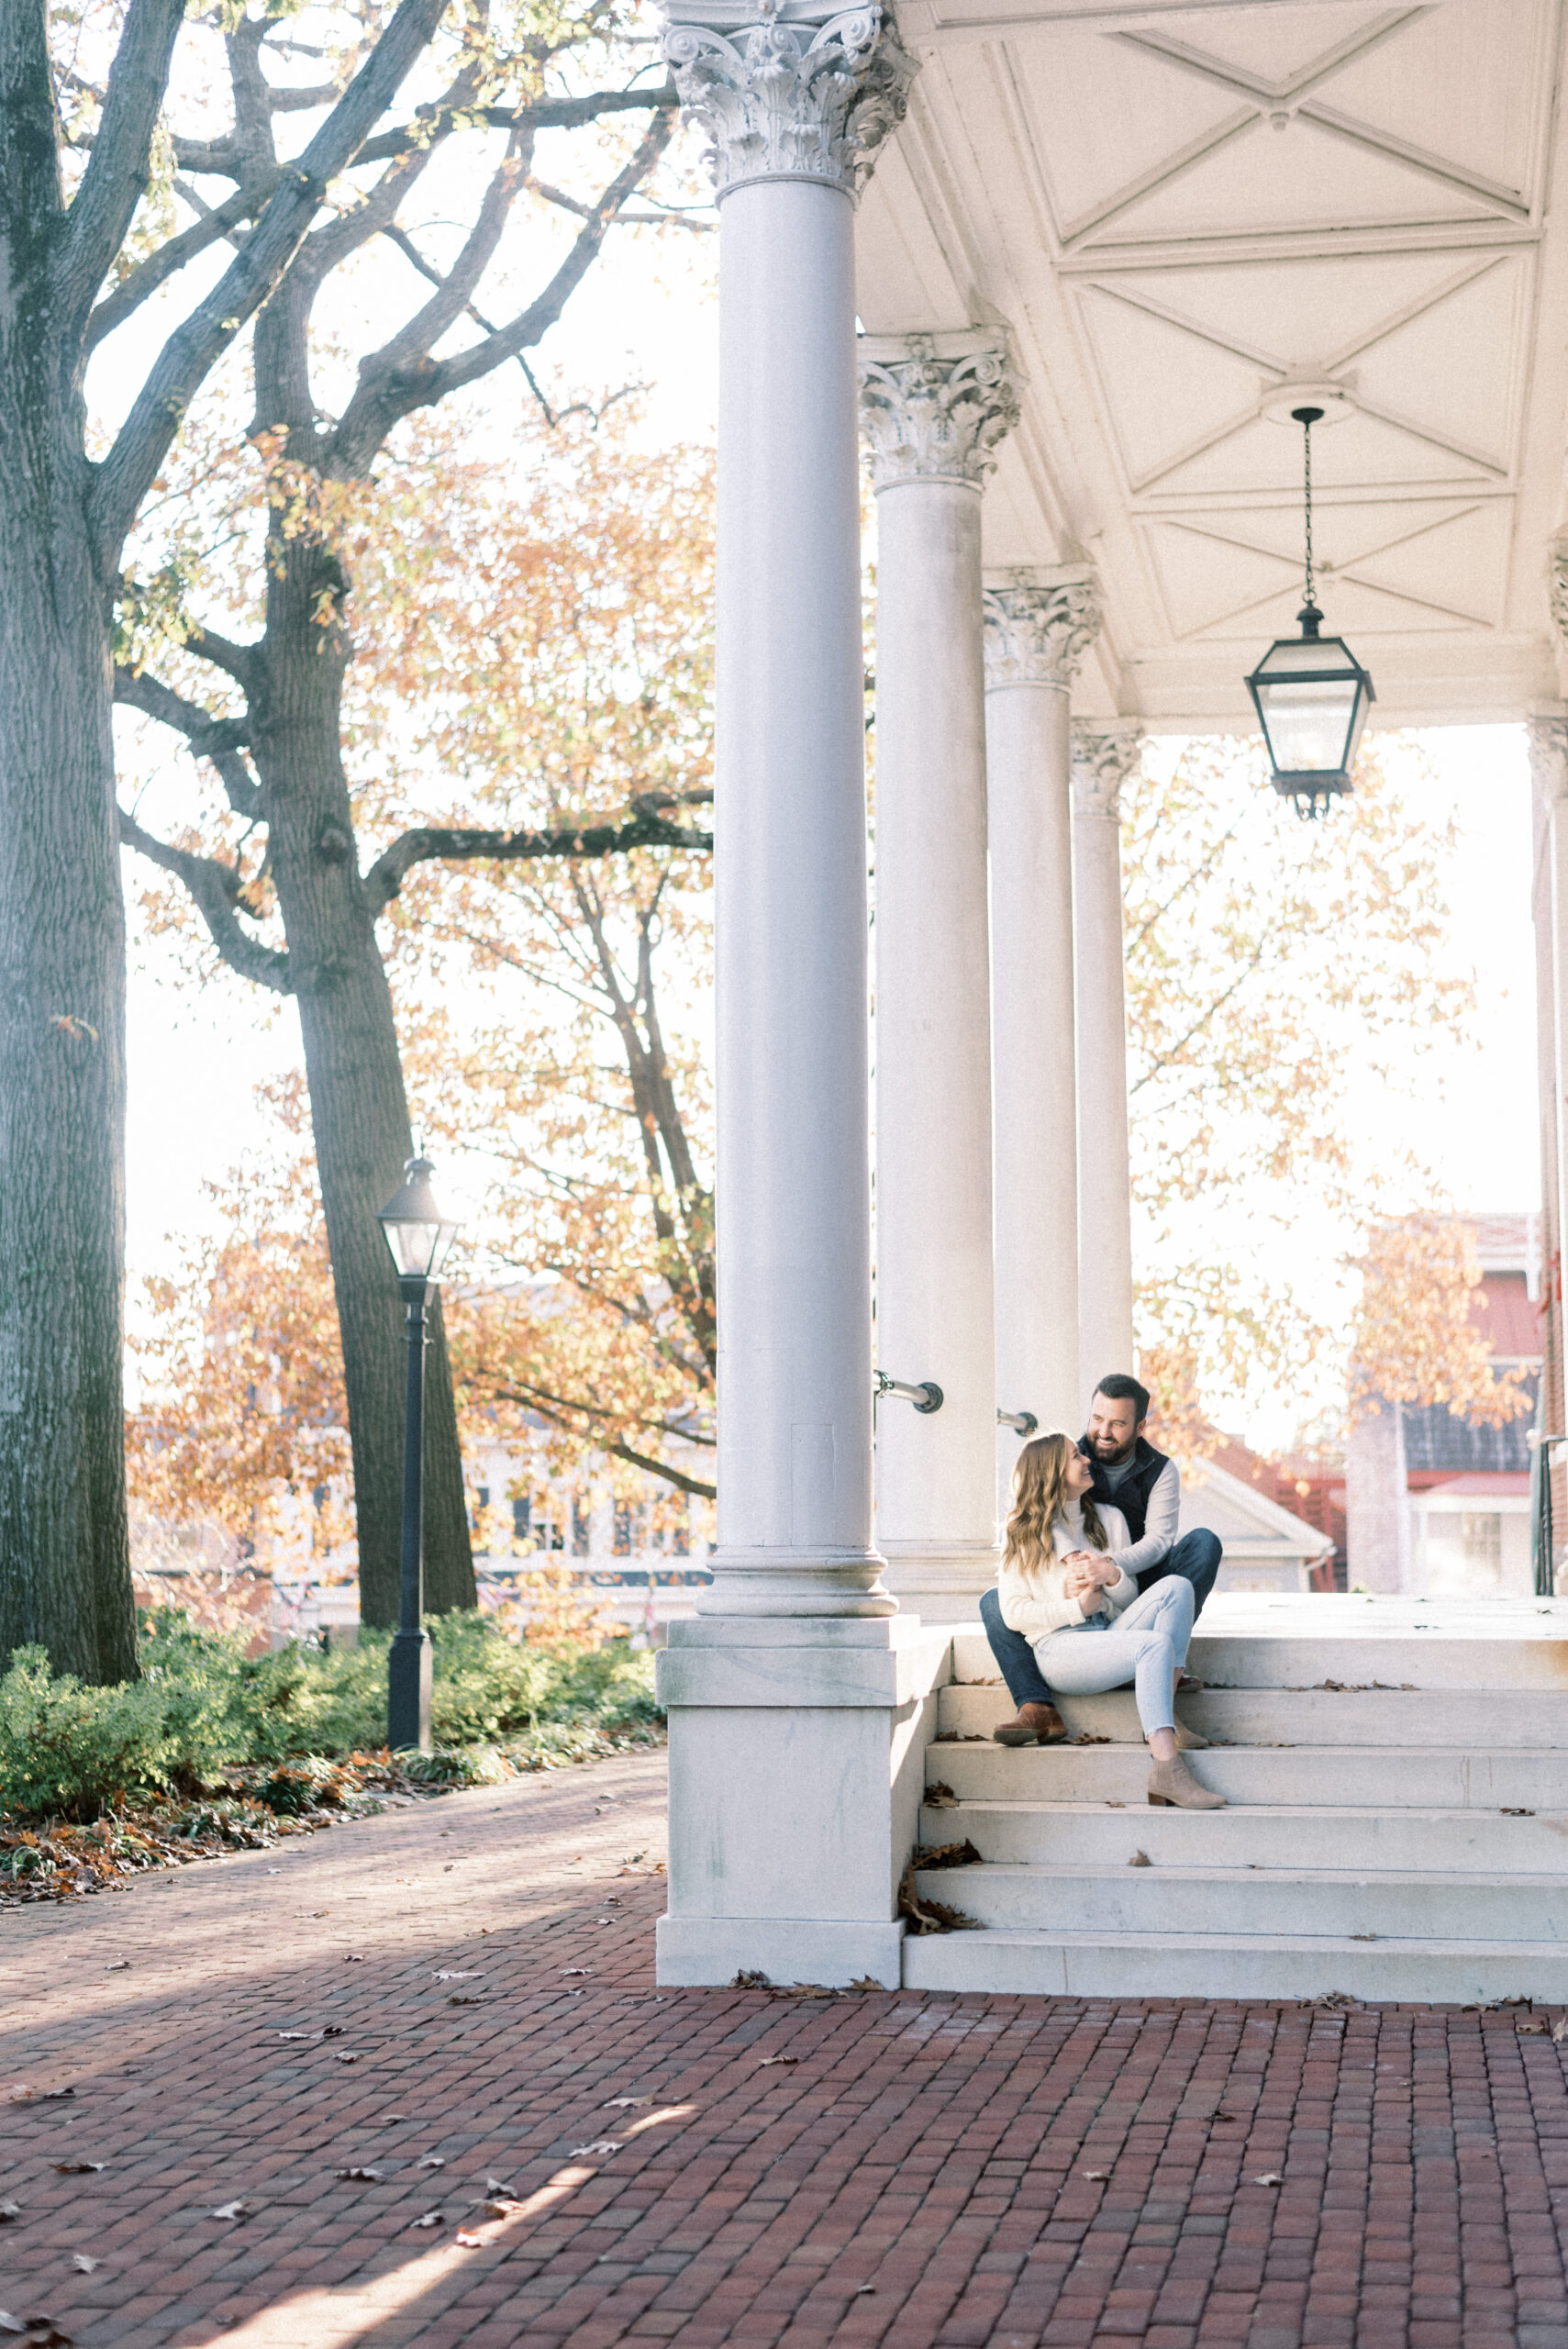 Maryland wedding photographer captures couple sitting together on porch